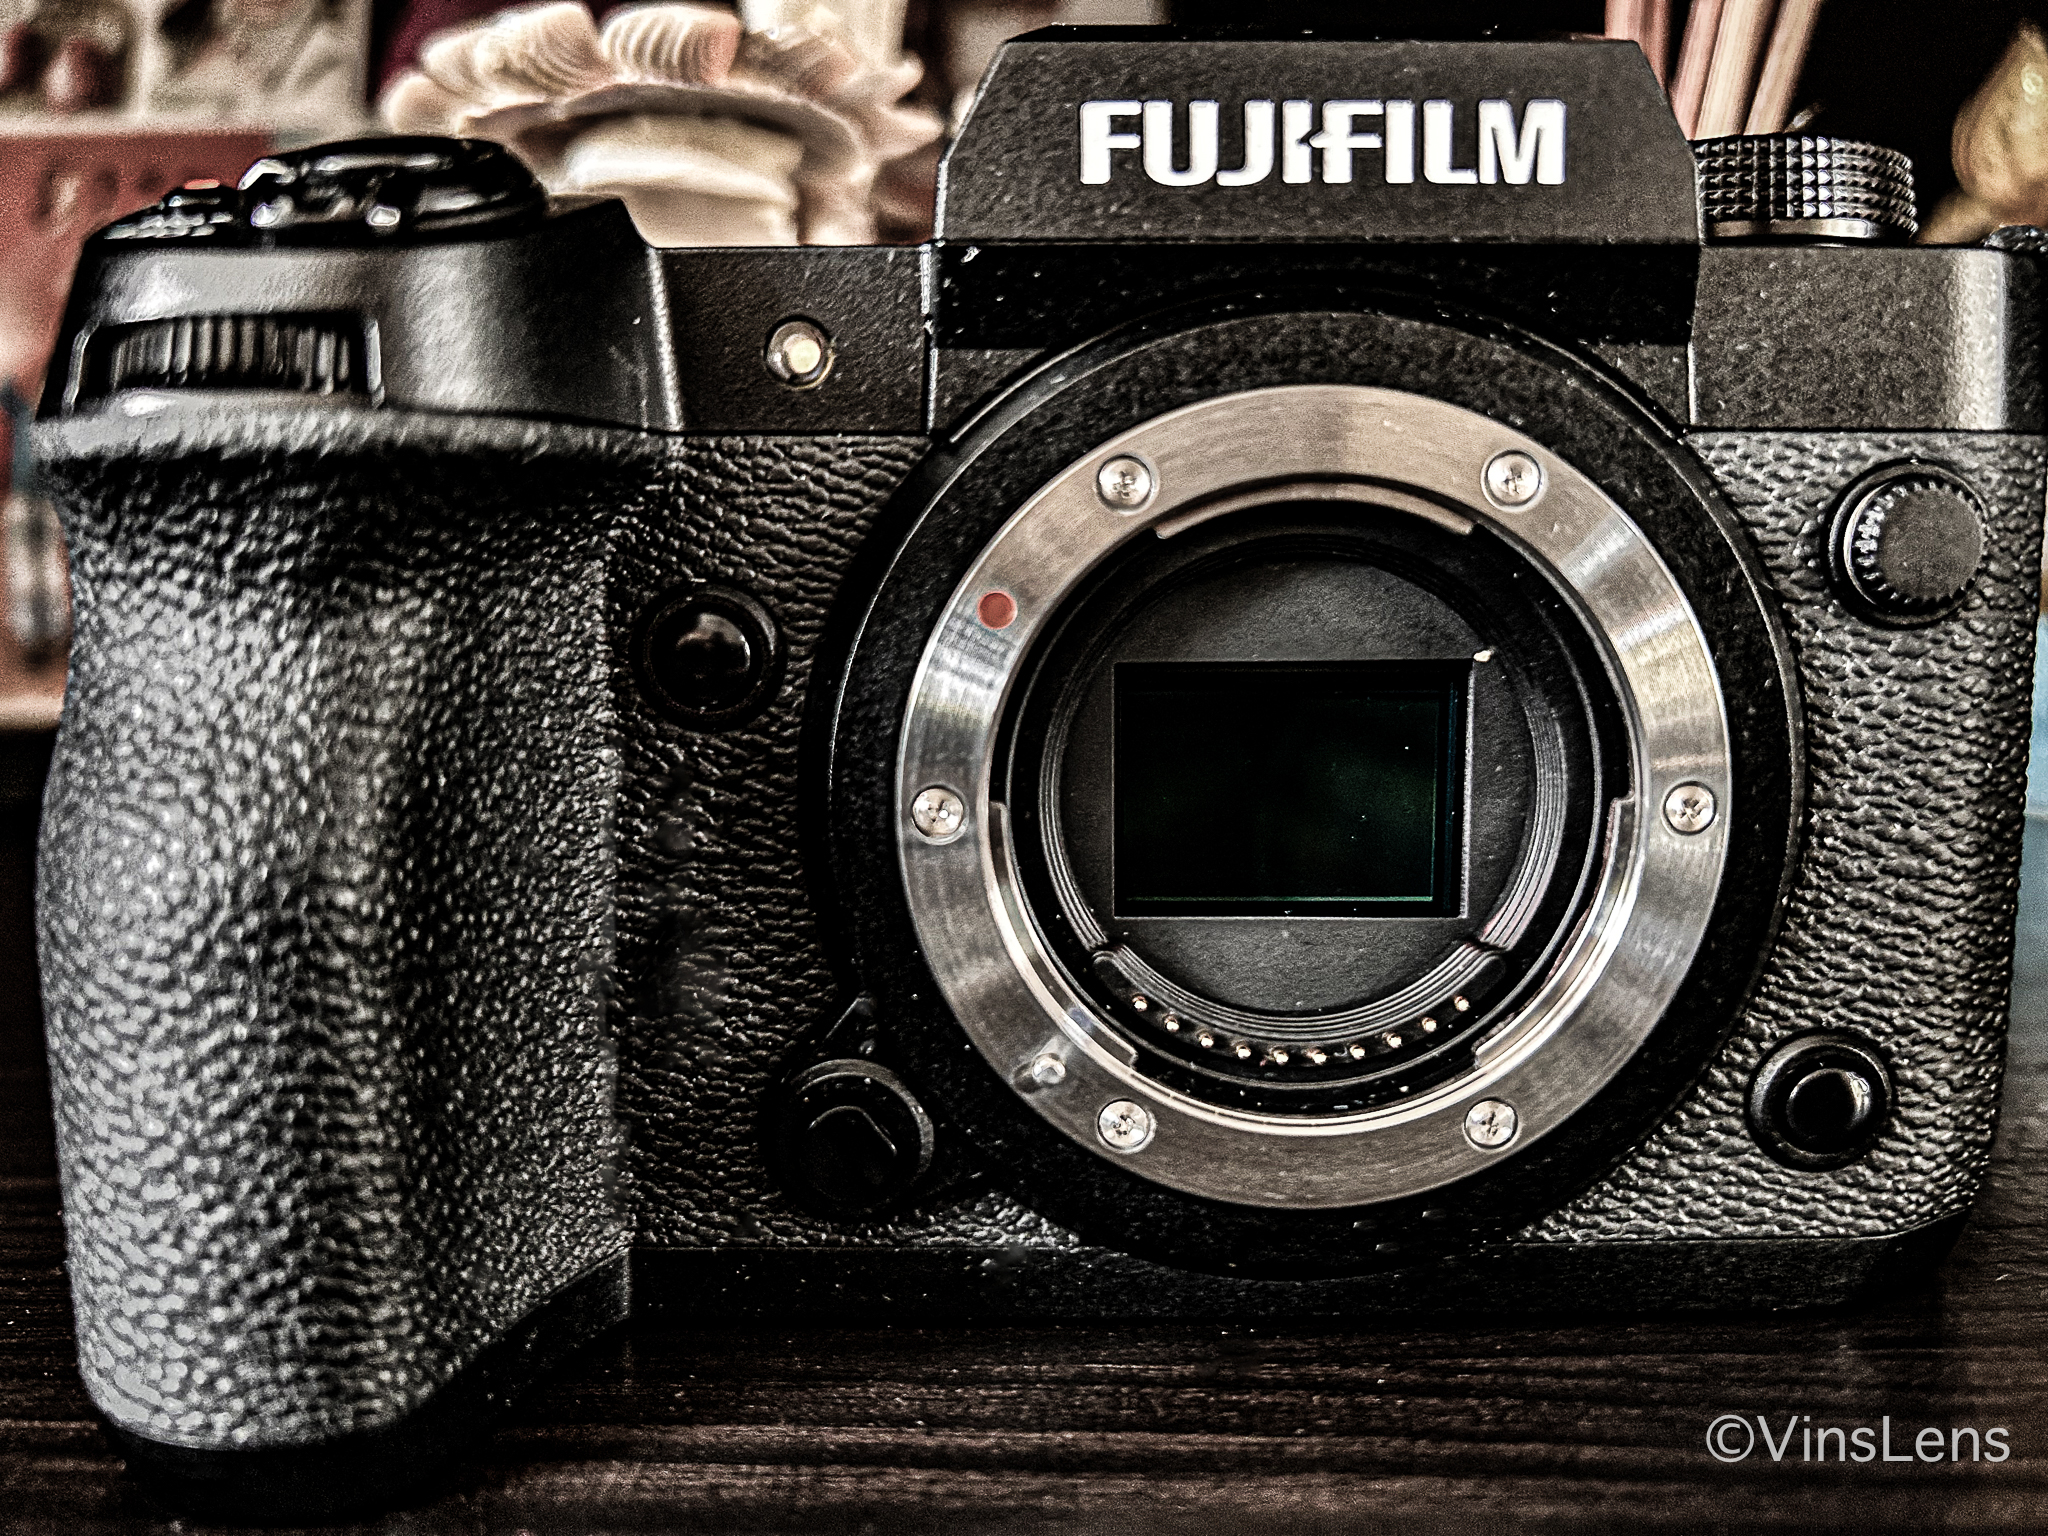 Fujifilm X-H2